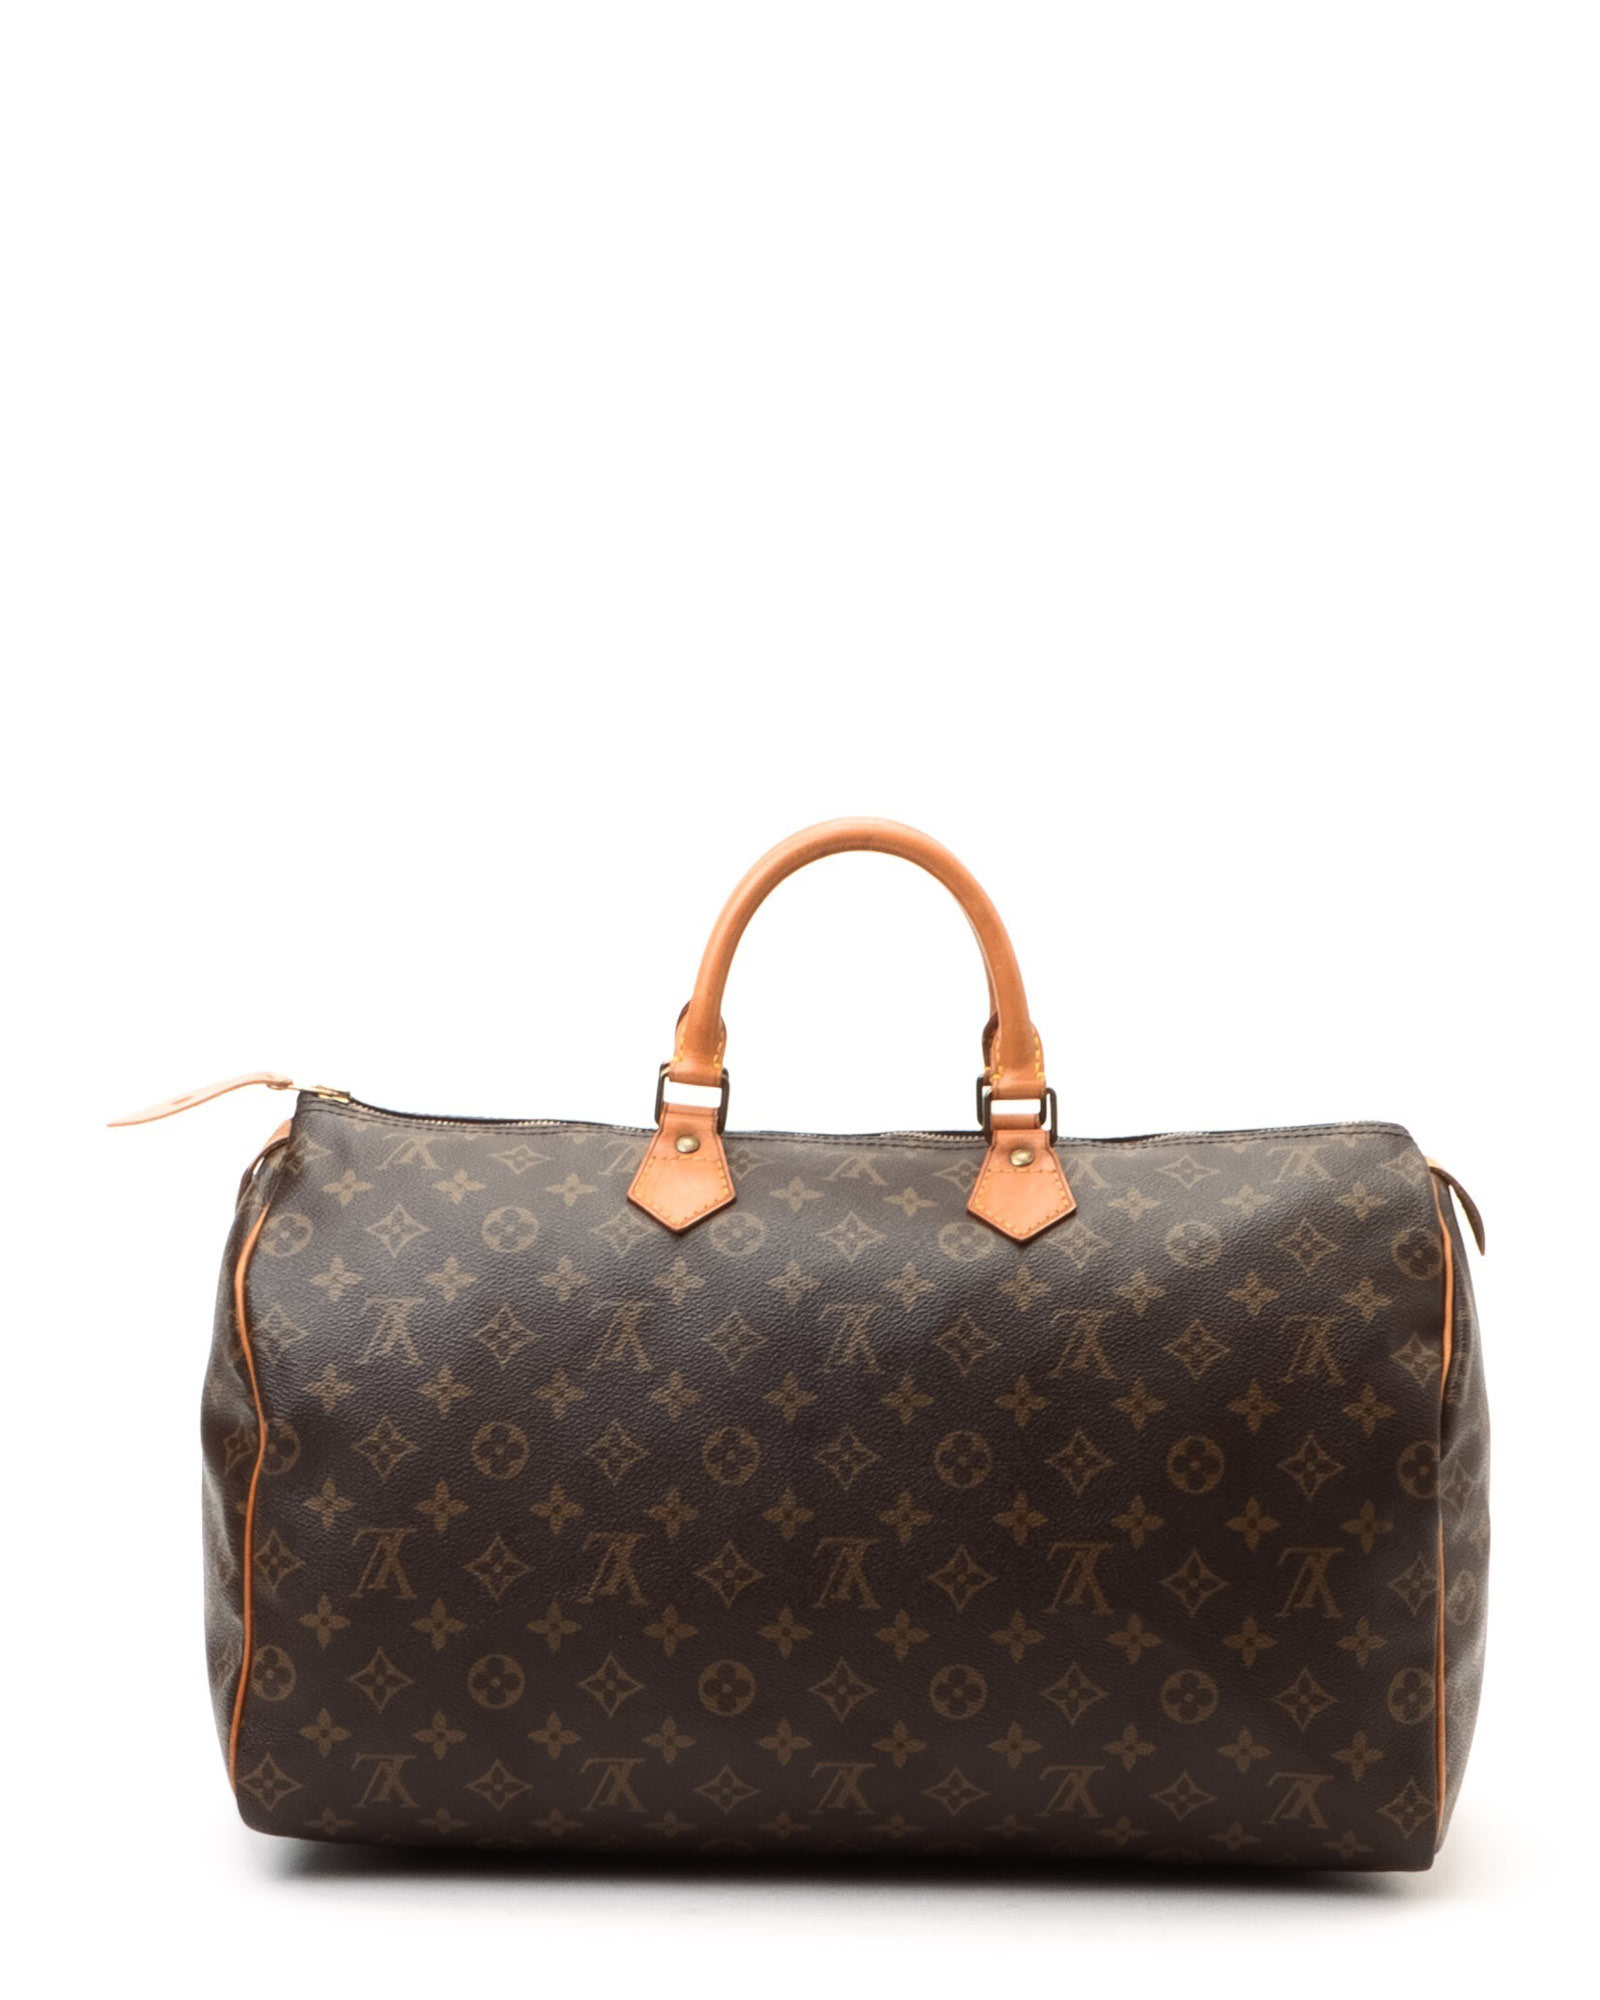 Lyst - Louis Vuitton Brown Handbag in Brown